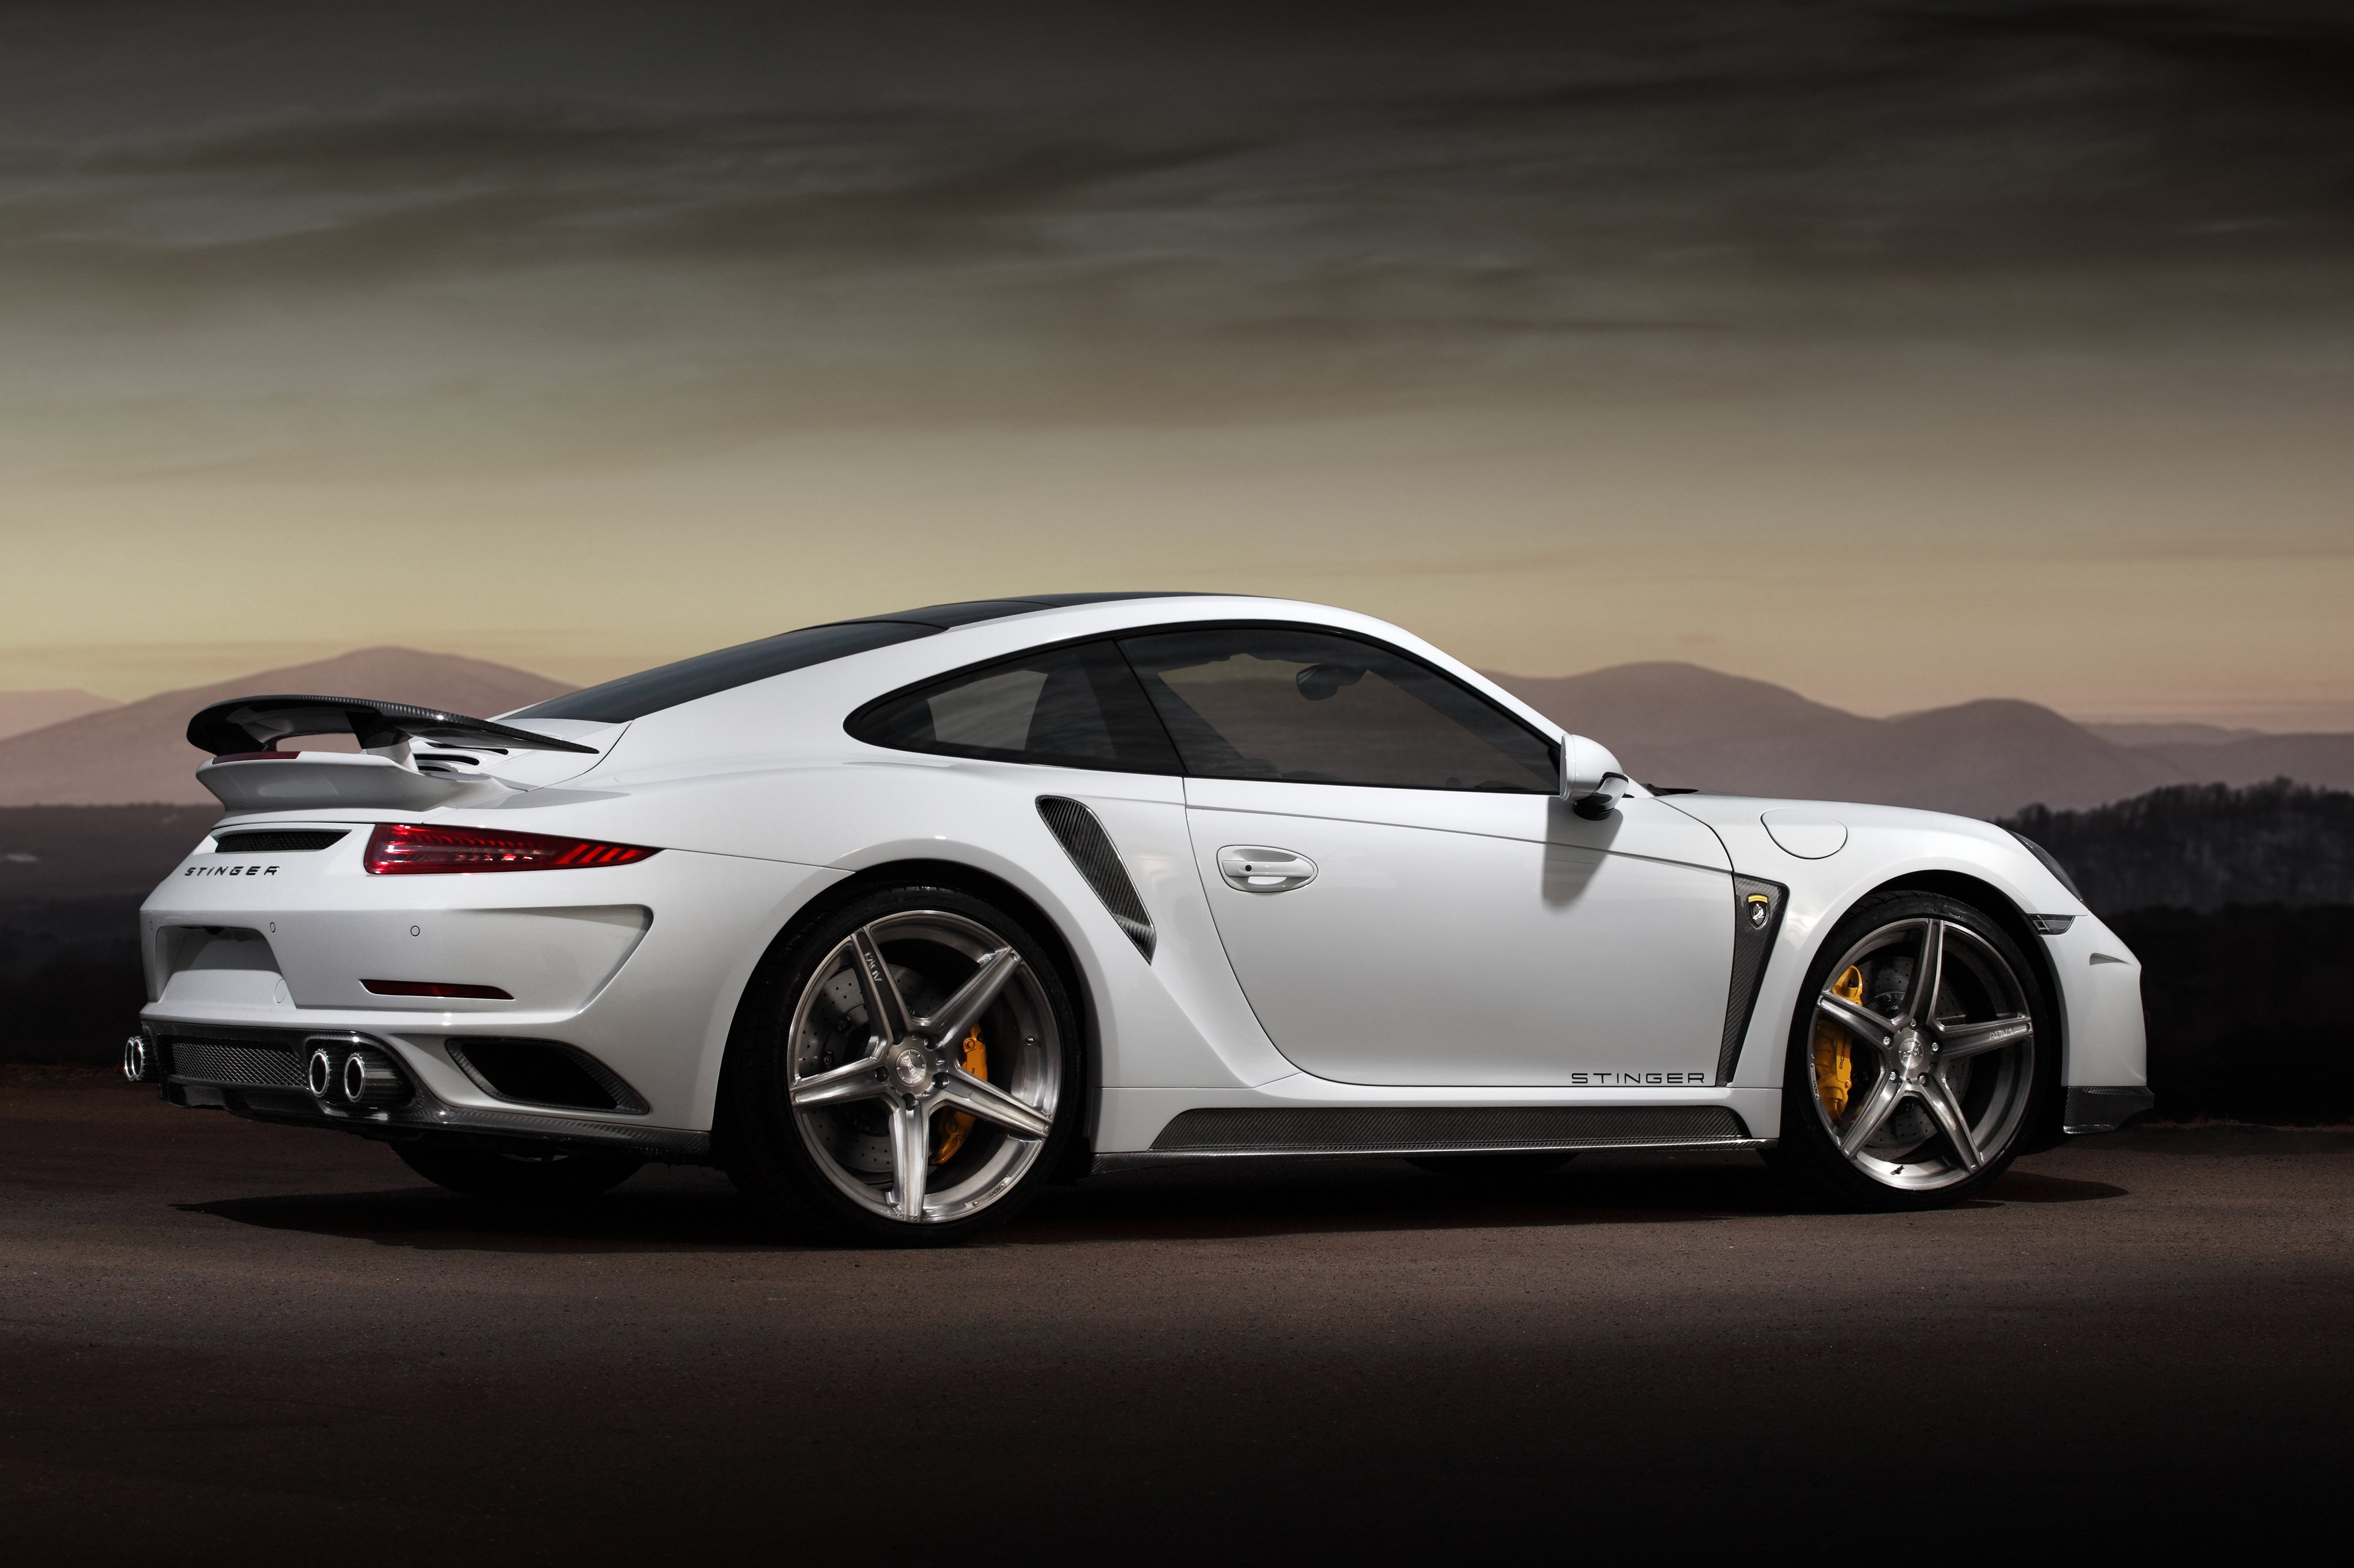 2014, Topcar, Porsche, 911, Turbo, Stinger, Gtr,  991 , Tuning, Supercar Wallpaper